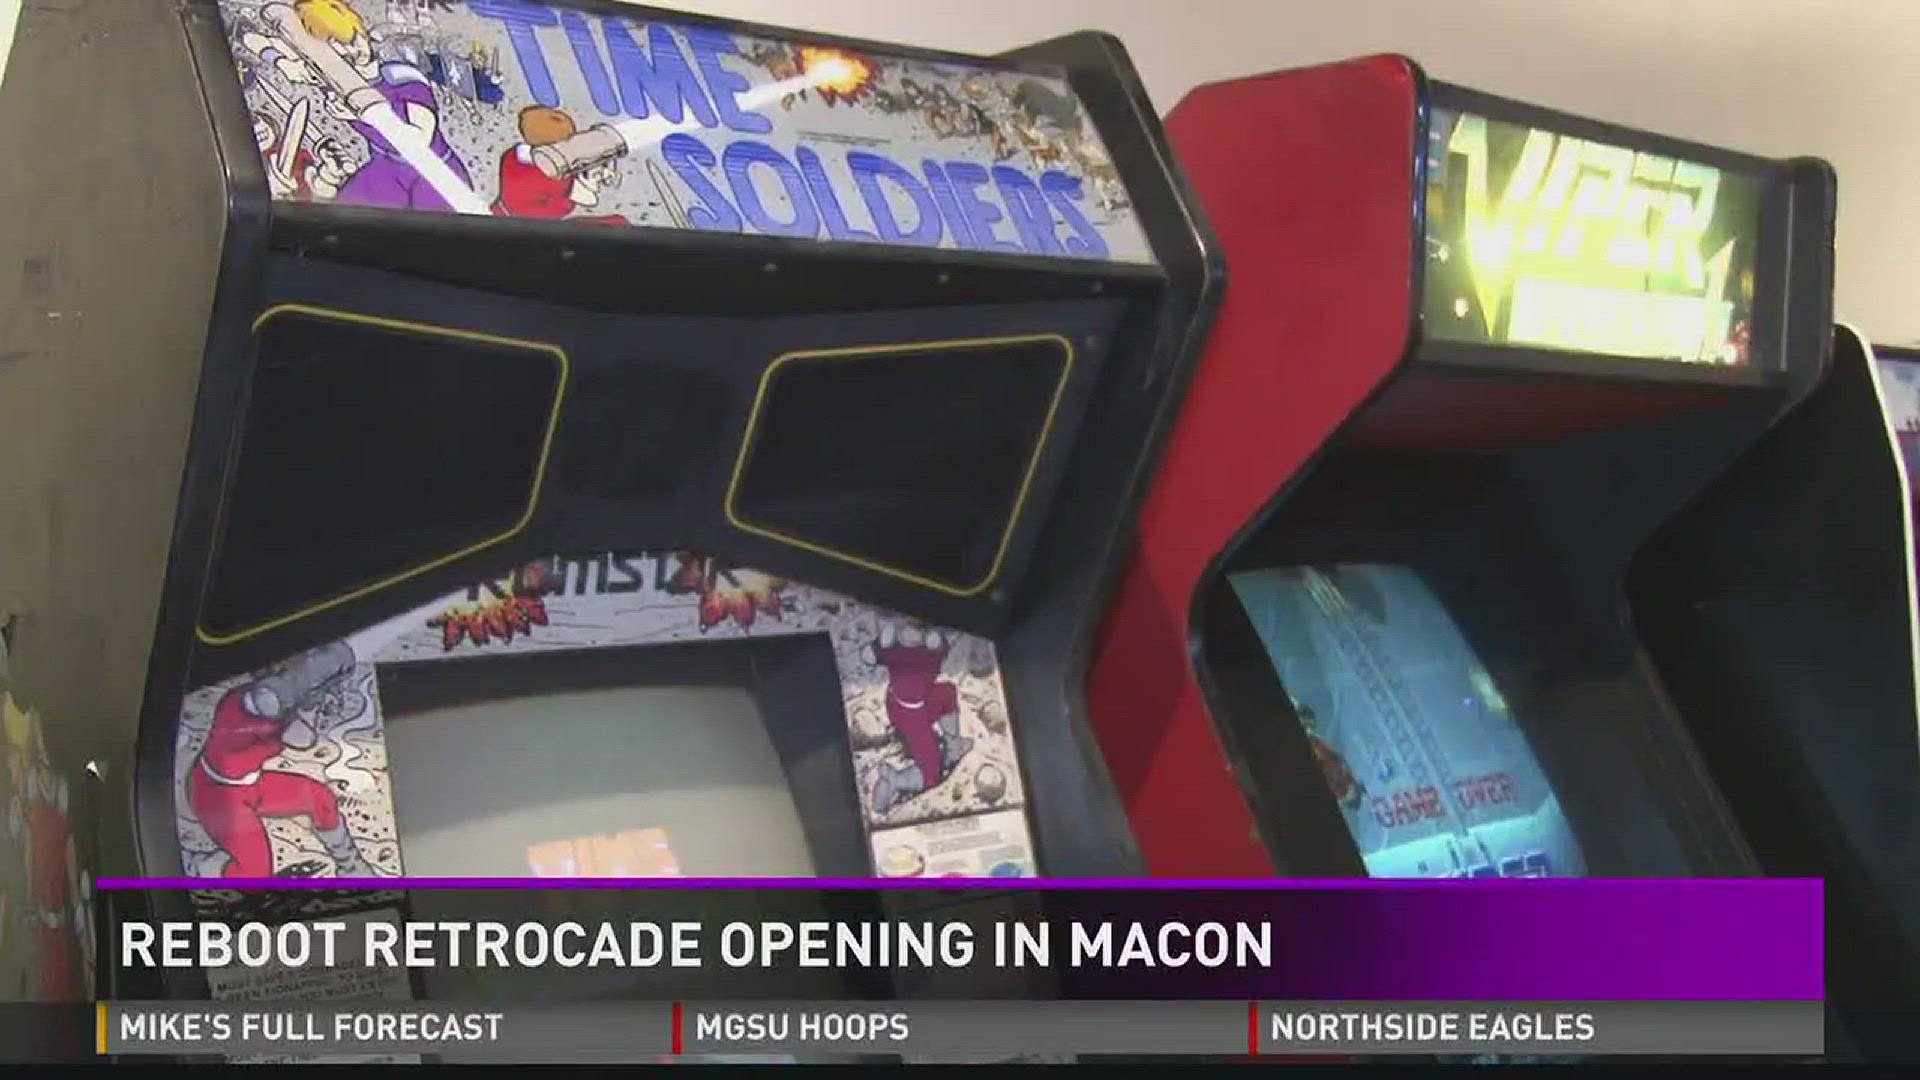 Reboot Retrocade opening in Macon